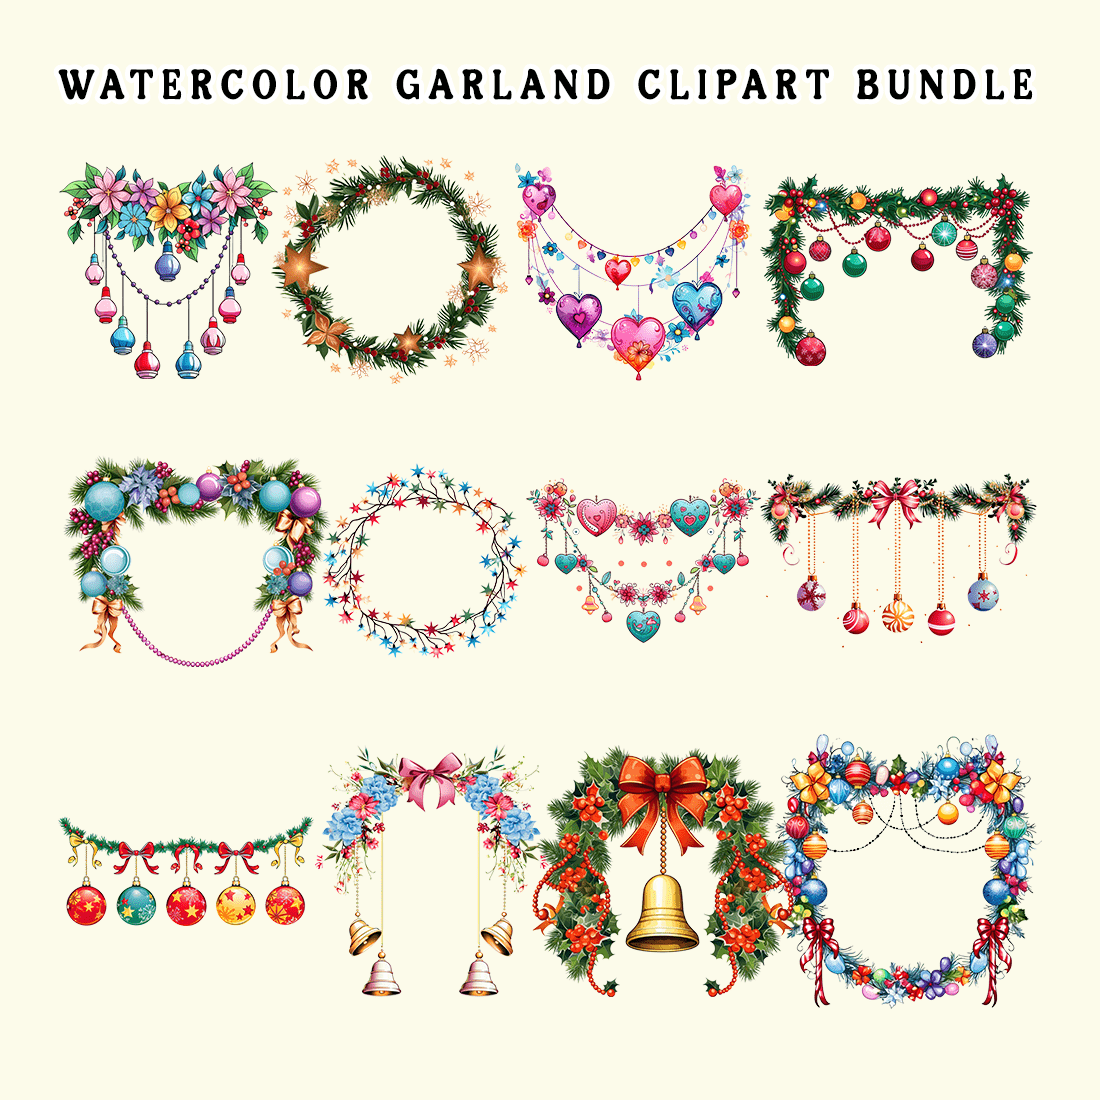 Watercolor Garland Clipart Bundle preview image.